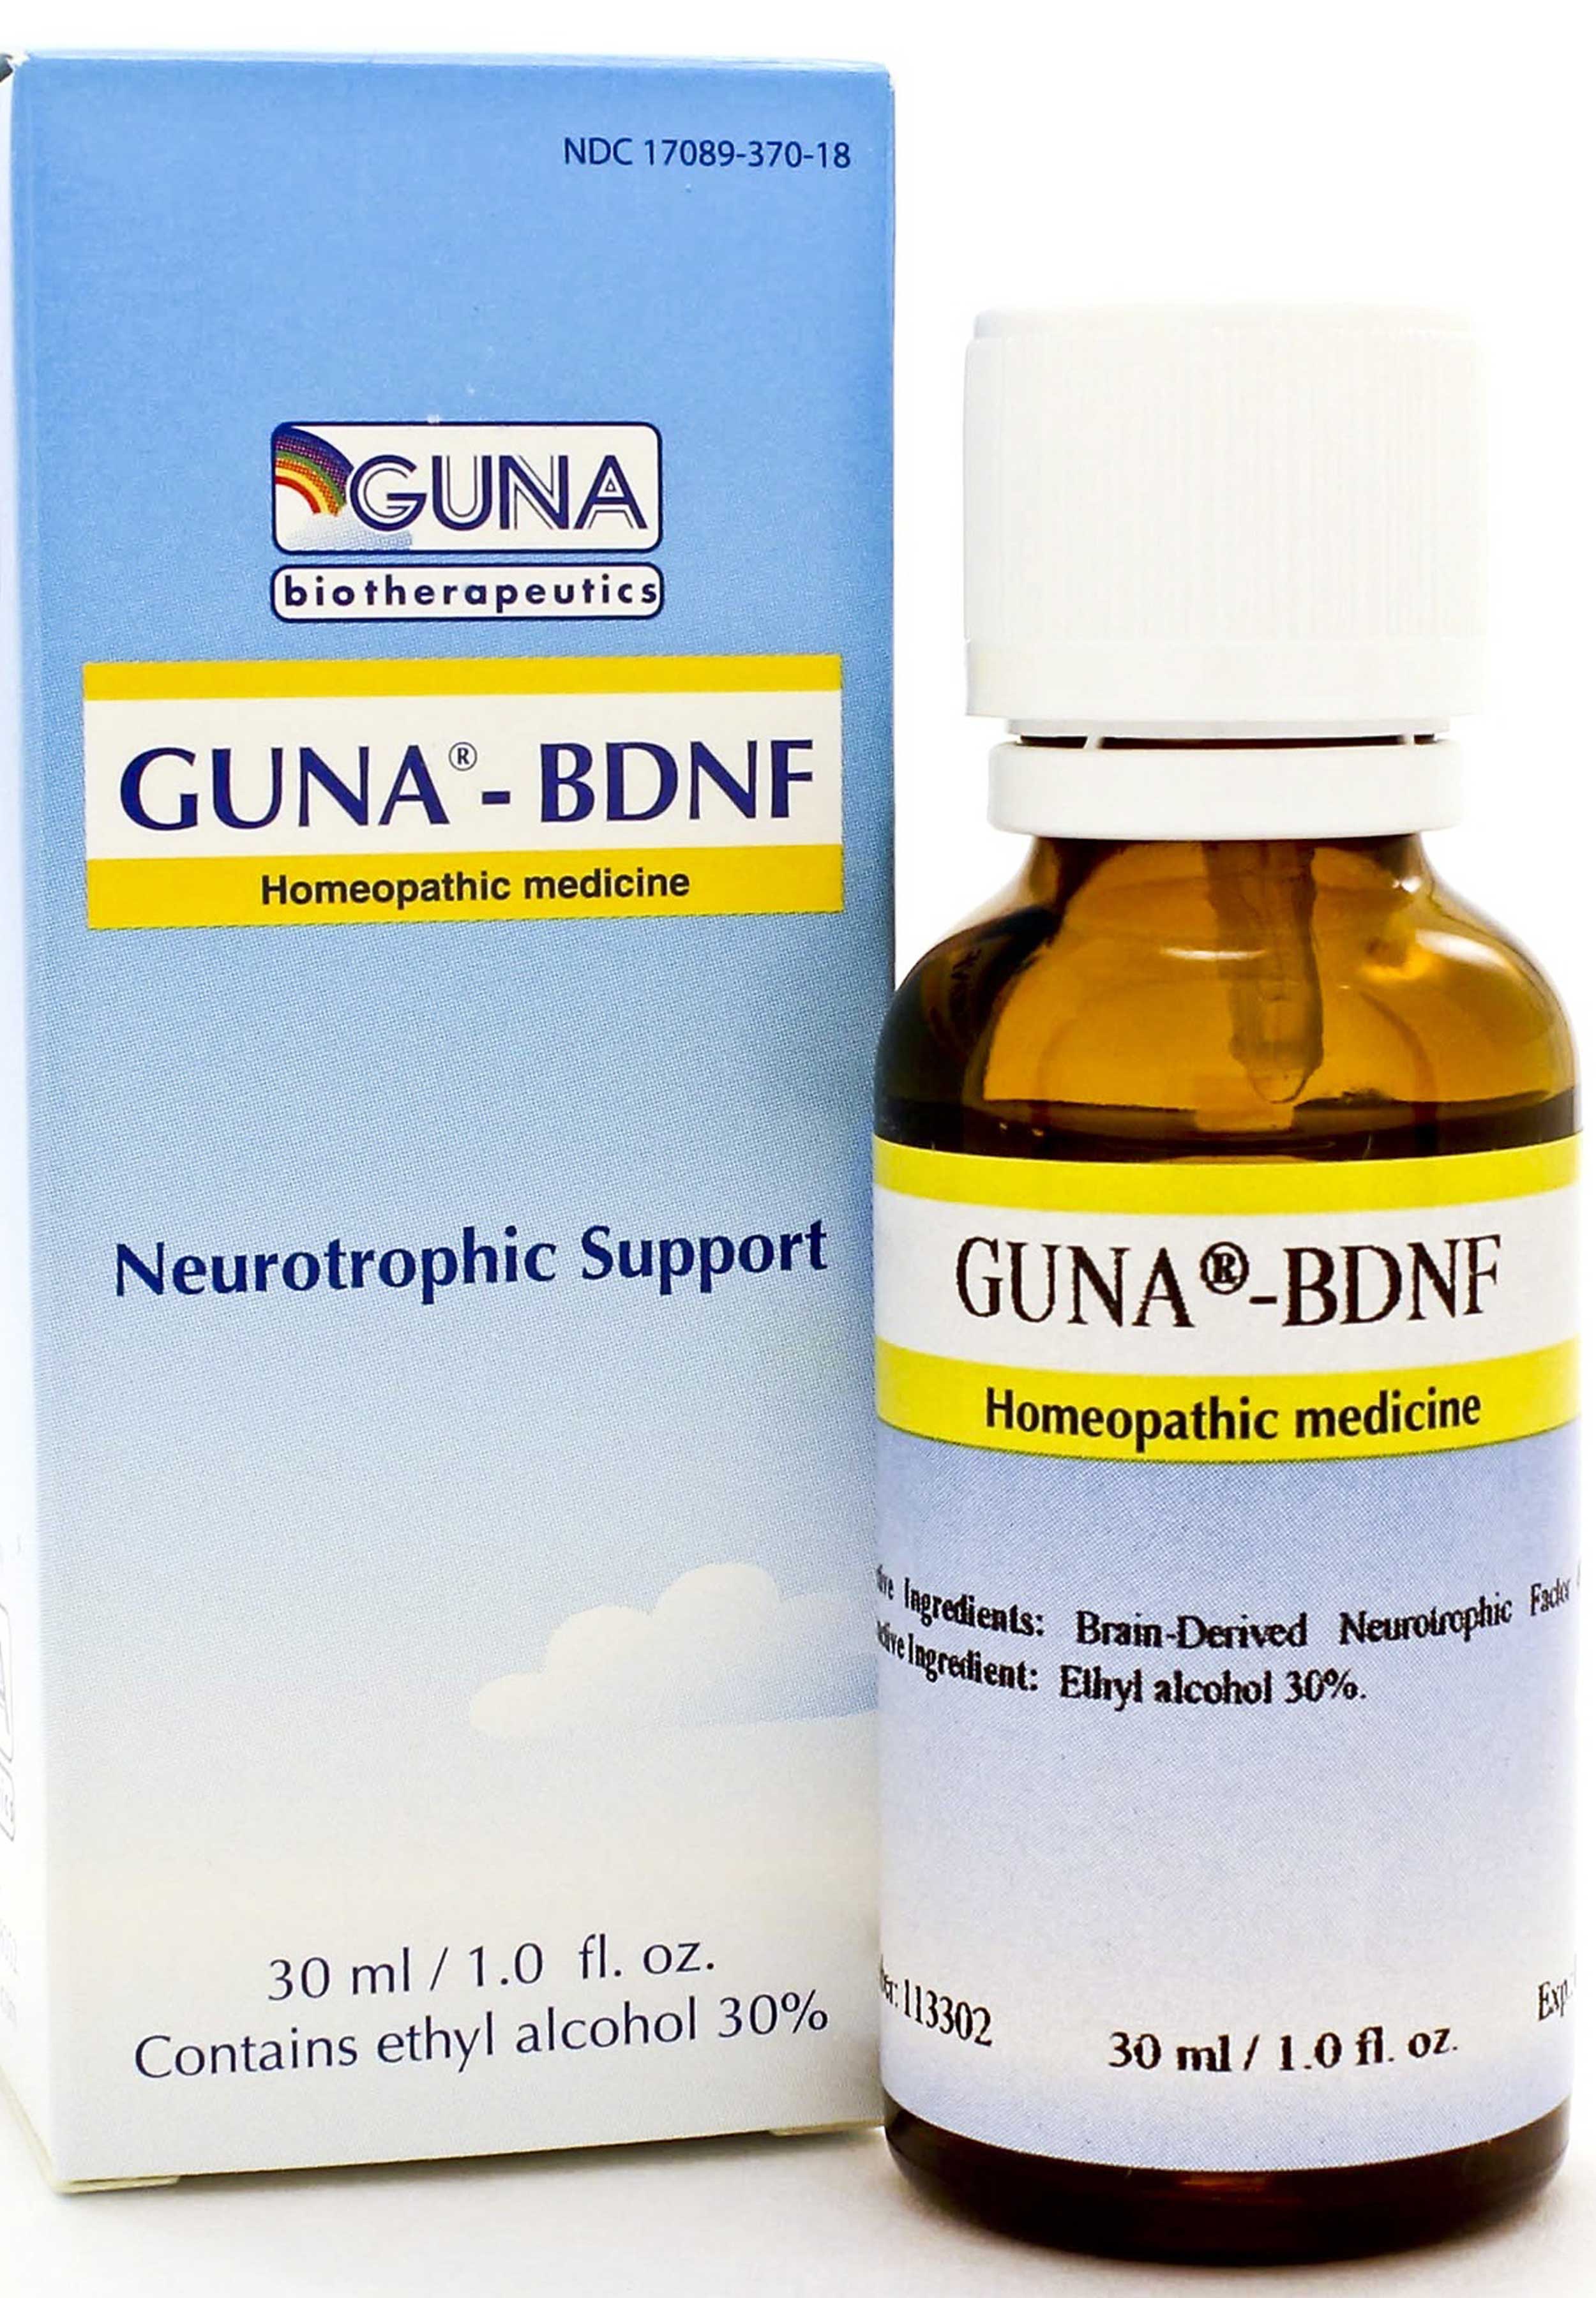 GUNA Biotherapeutics GUNA-BDNF